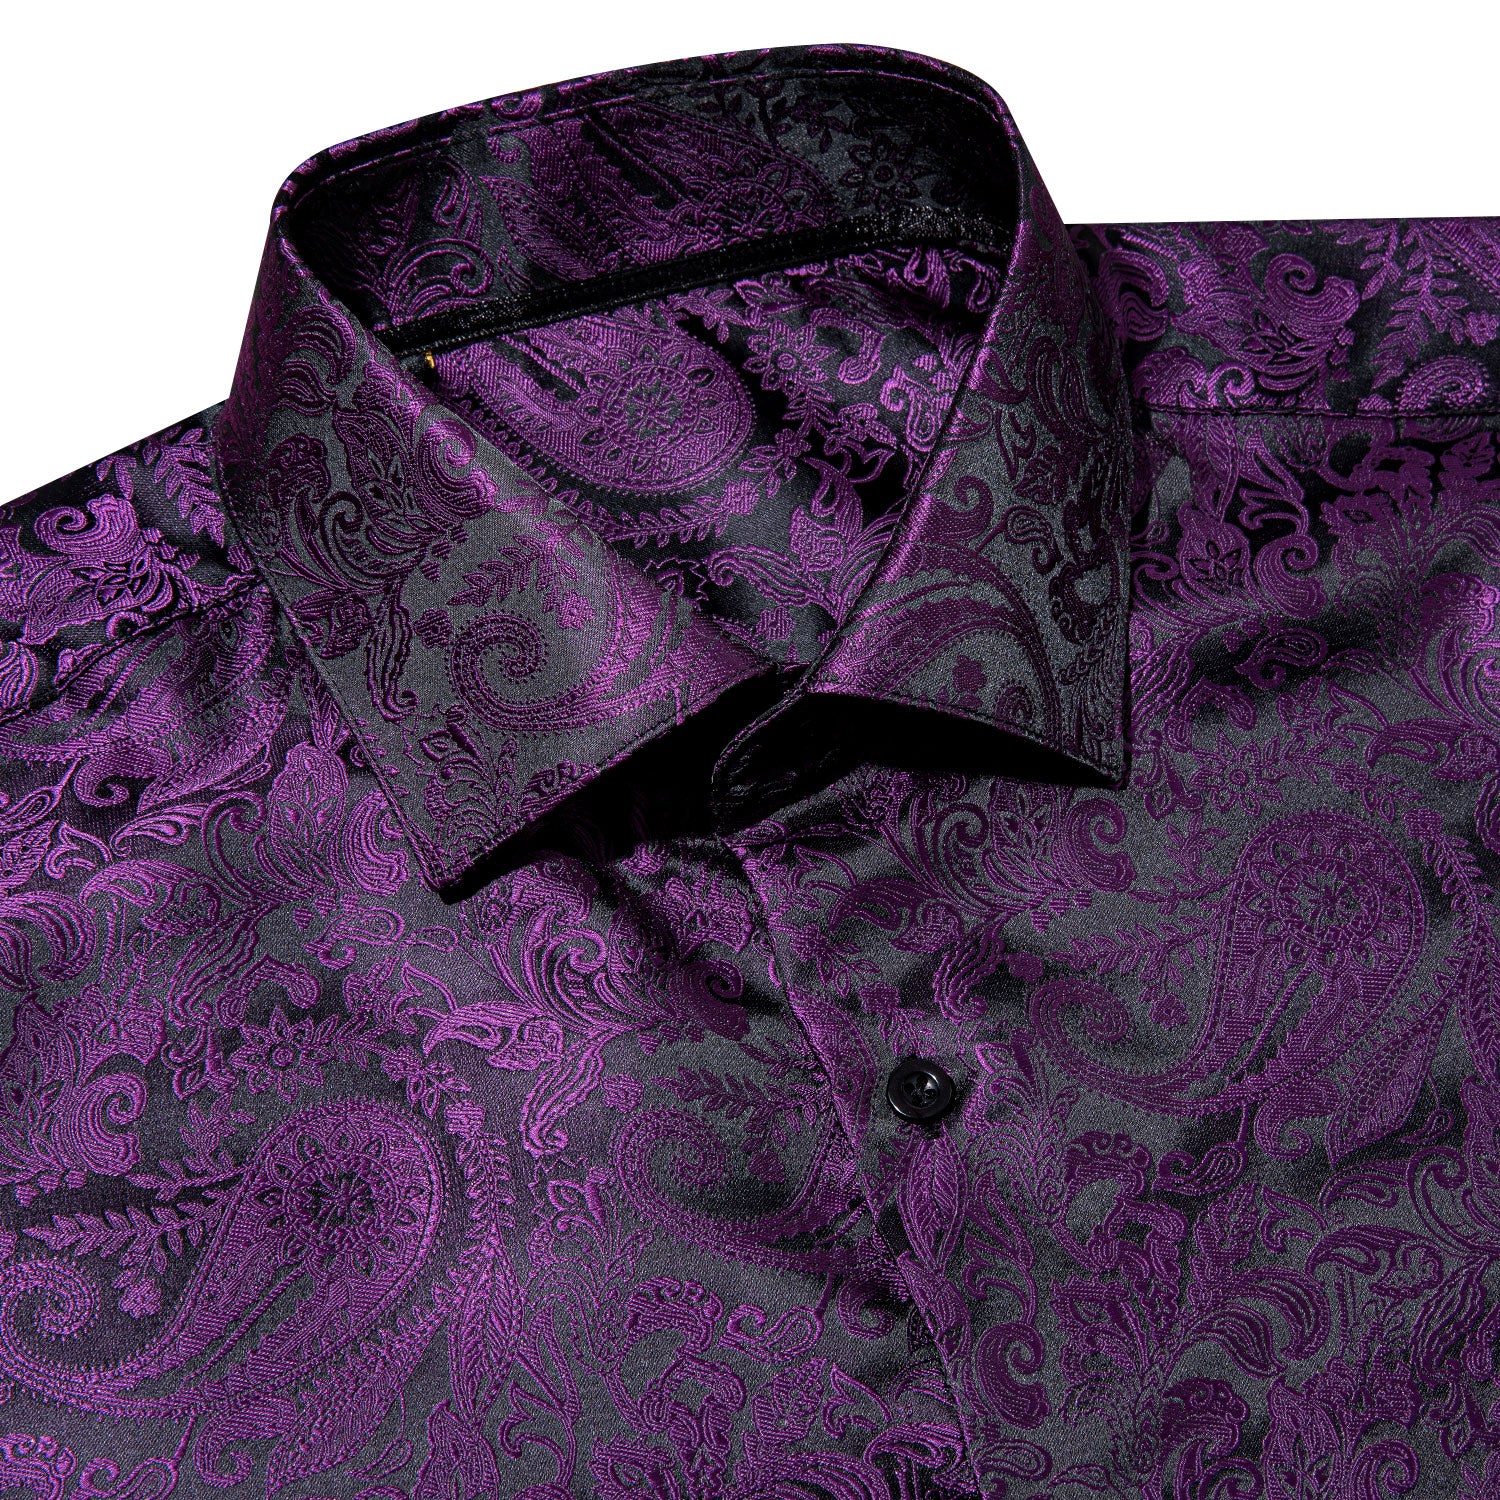 Barry.wang Purple Black Paisley Shirt